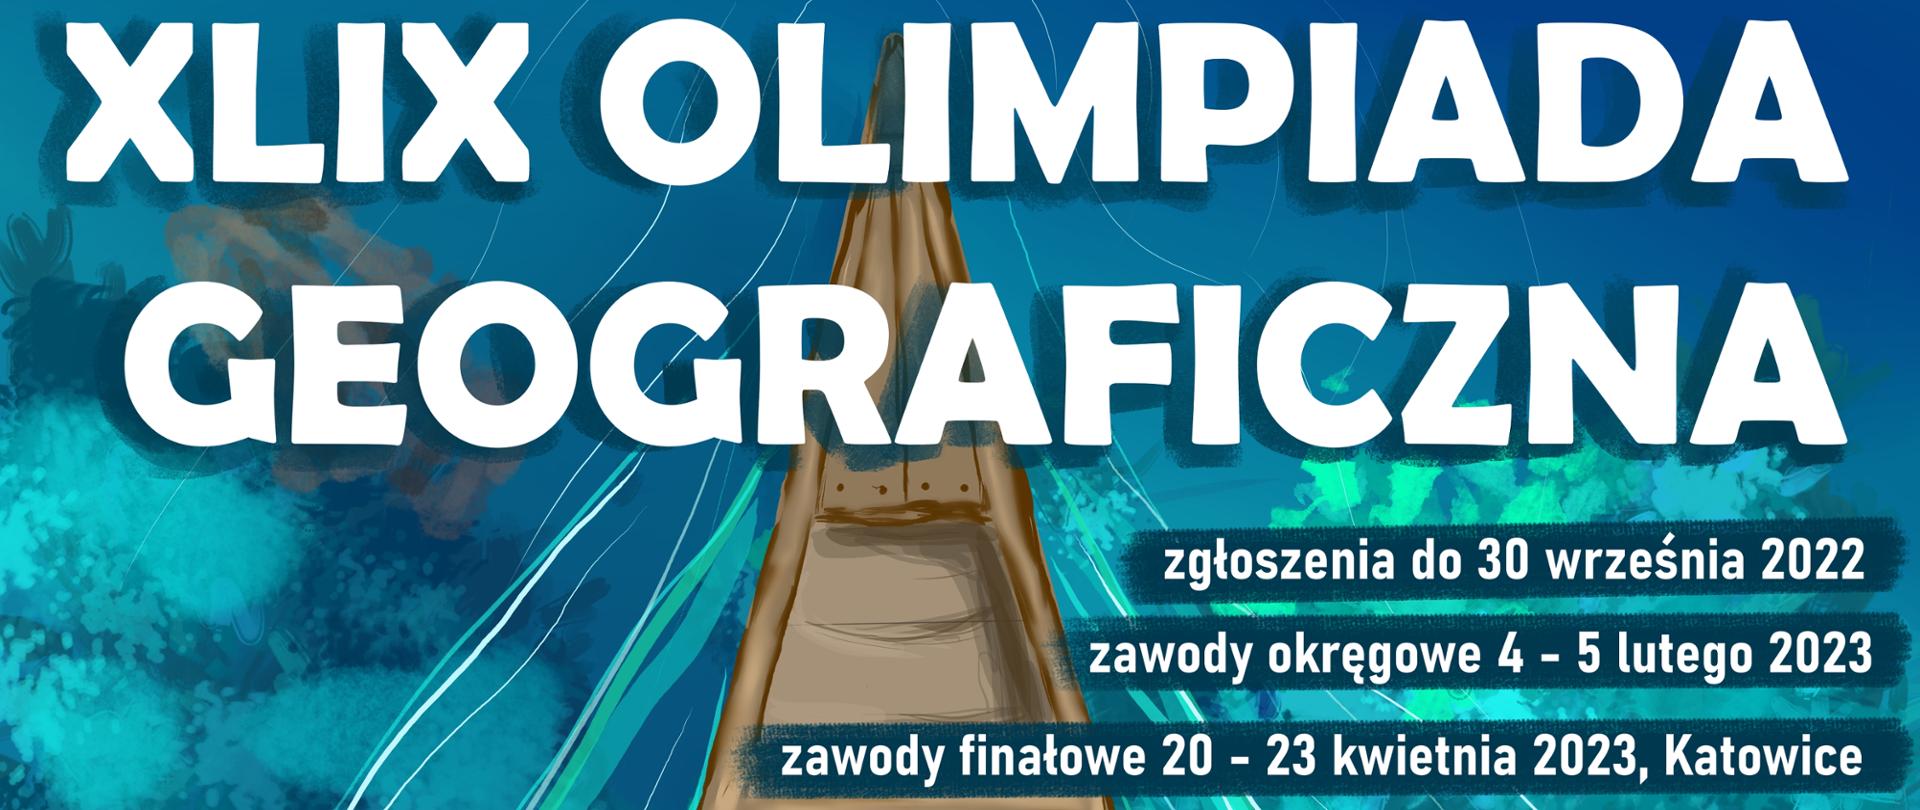 XLIX Olimpiada Geograficzna - plakat